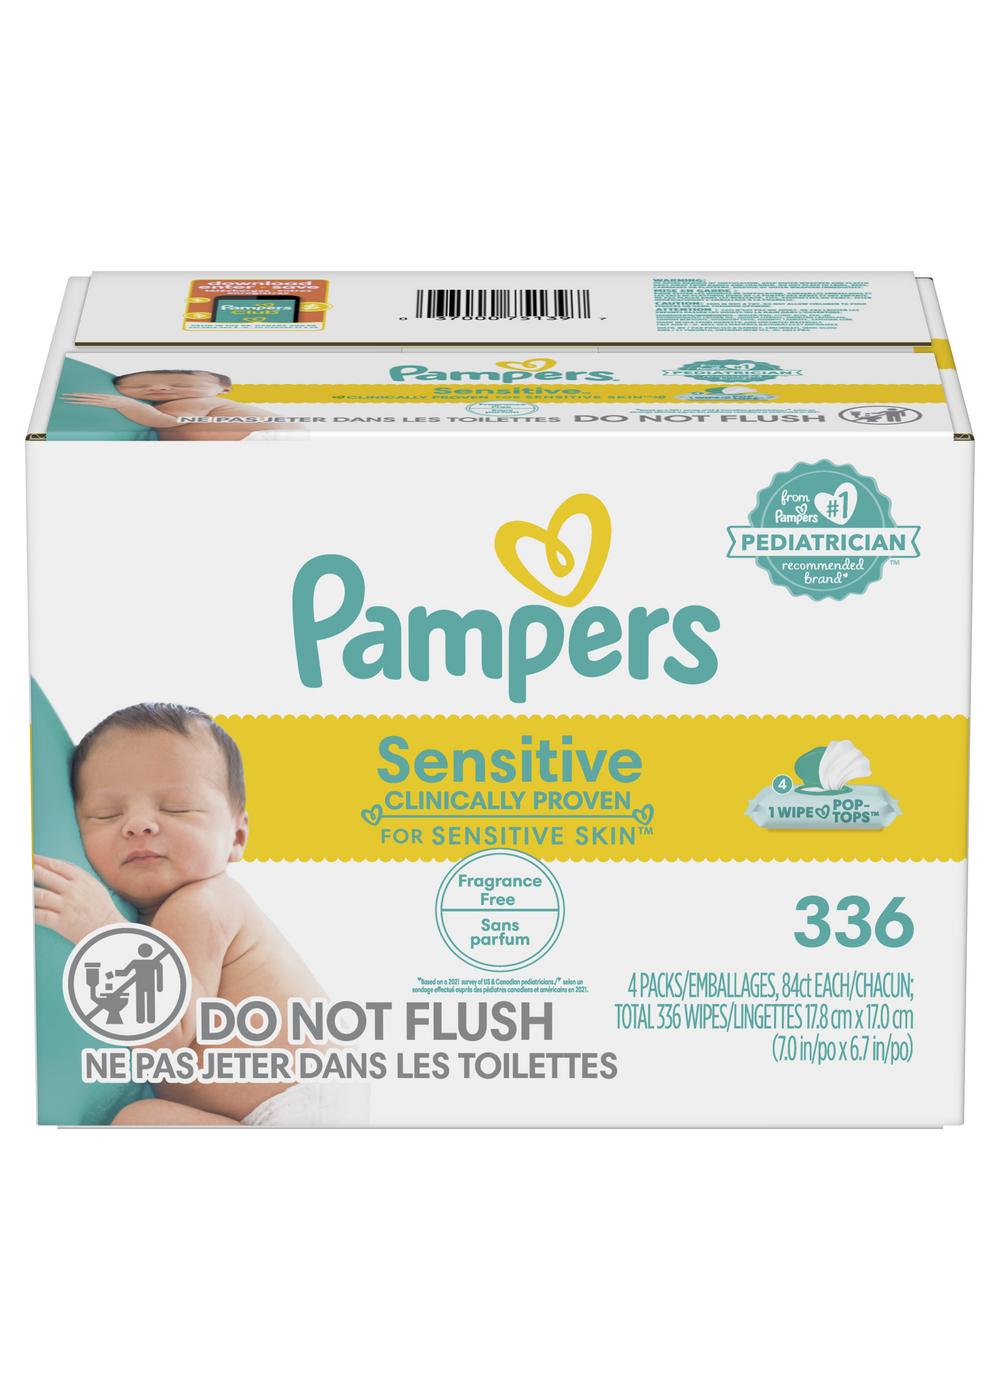 Pampers Sensitive Skin Baby Wipes Refills 4 Pk; image 1 of 10